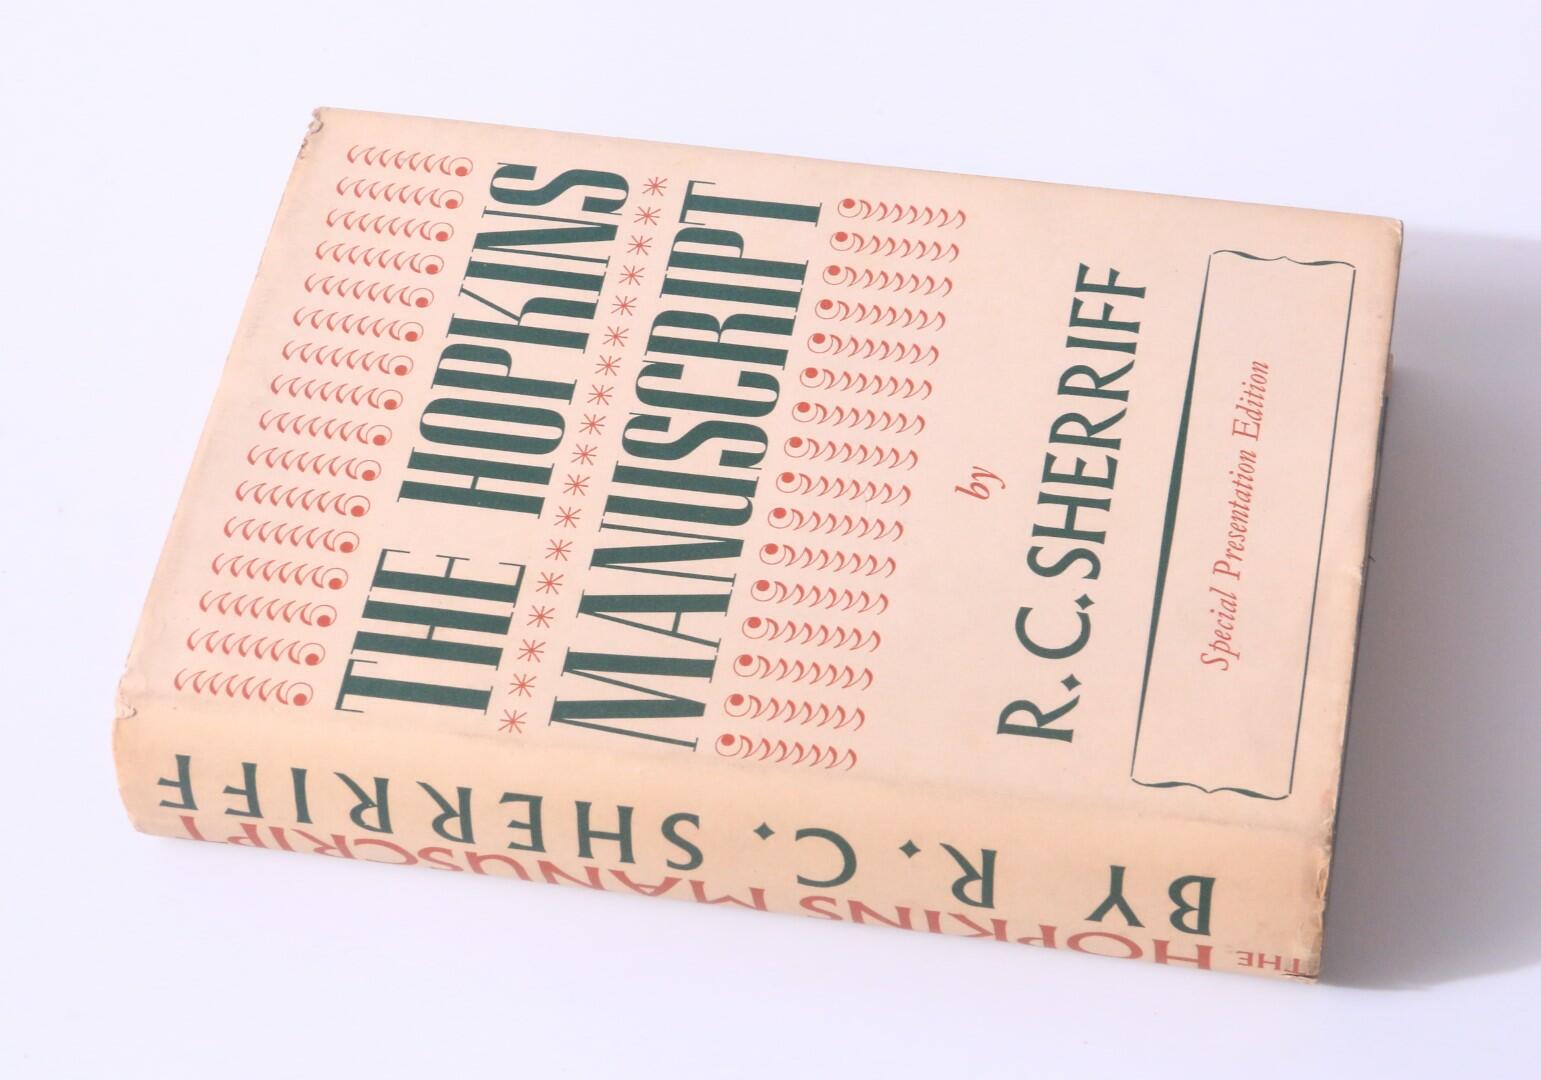 R.C. Sherriff - The Hopkins Manuscript - Gollancz, 1939, Limited Edition.